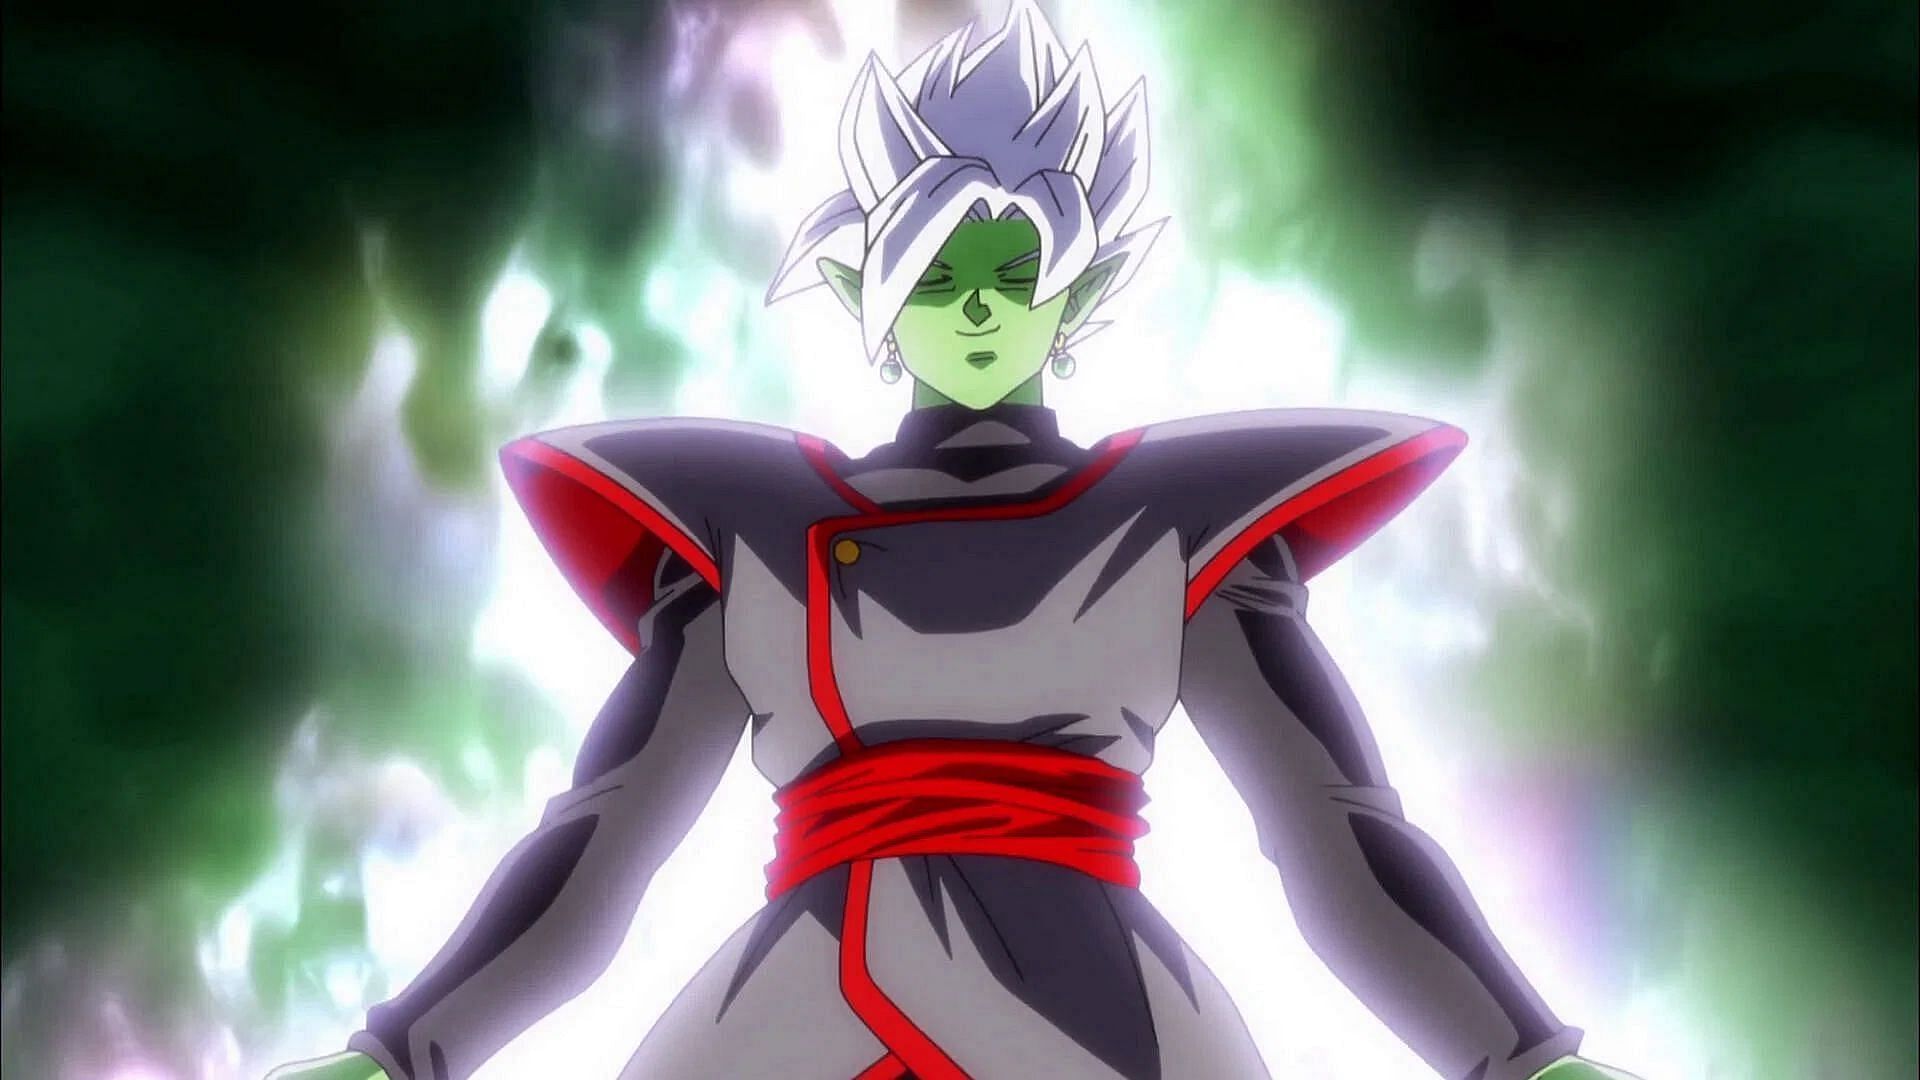 Fused Zamasu as seen in the Super anime (Image via Toei Animation)